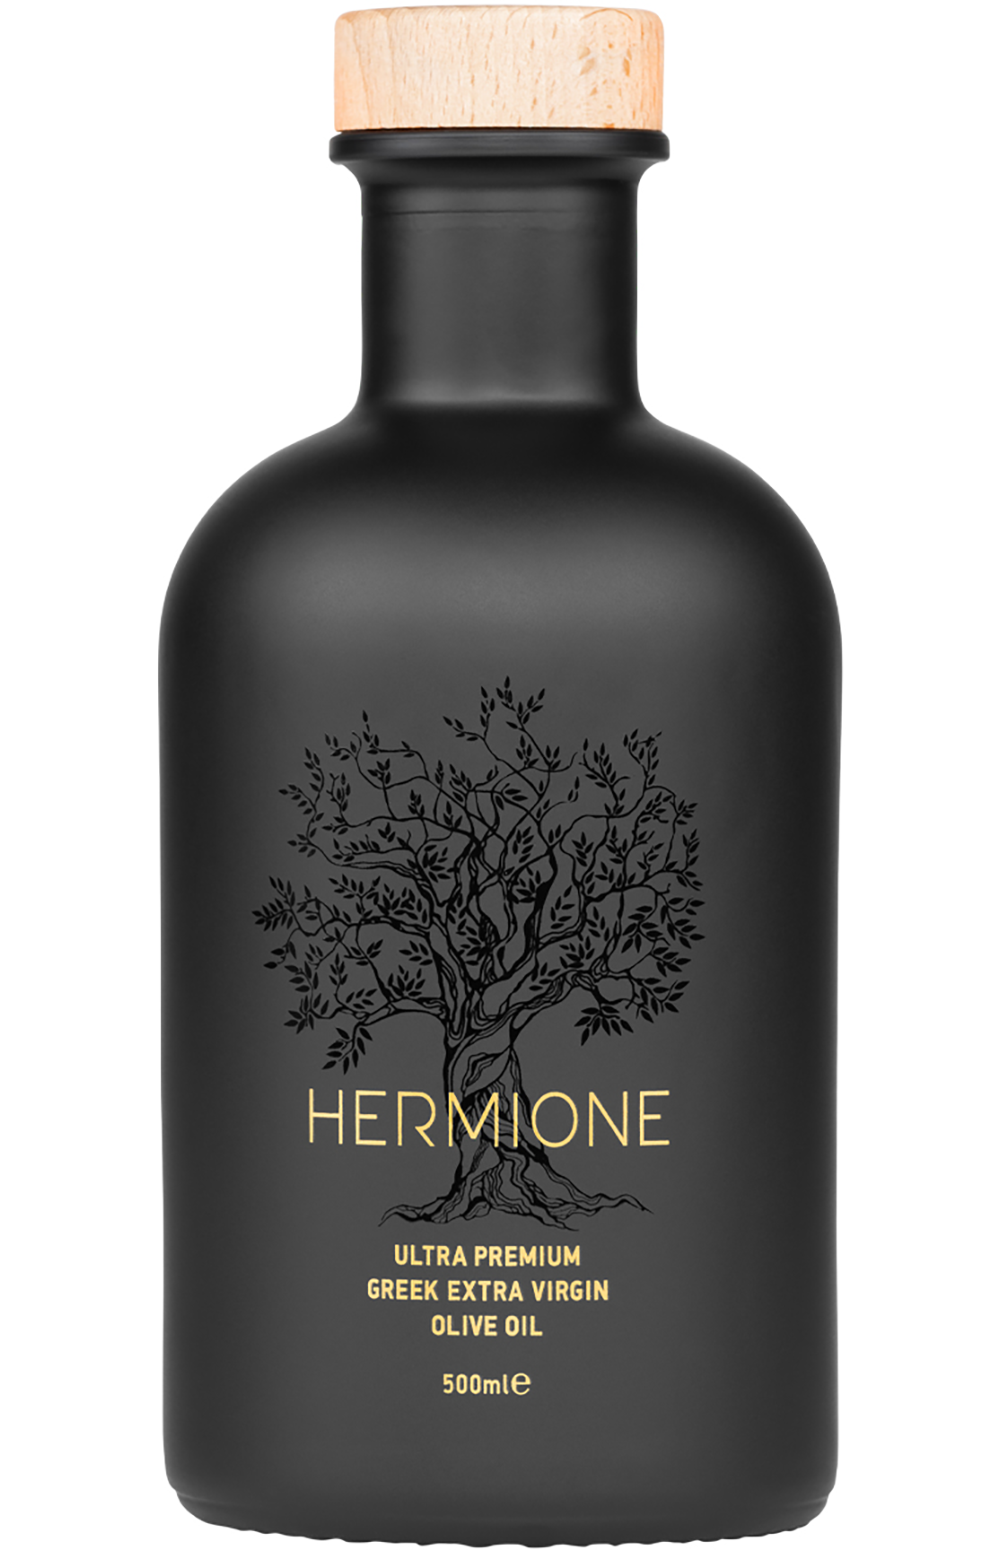 Hermione Single Estate Greek Extra Virgin Olive Oil